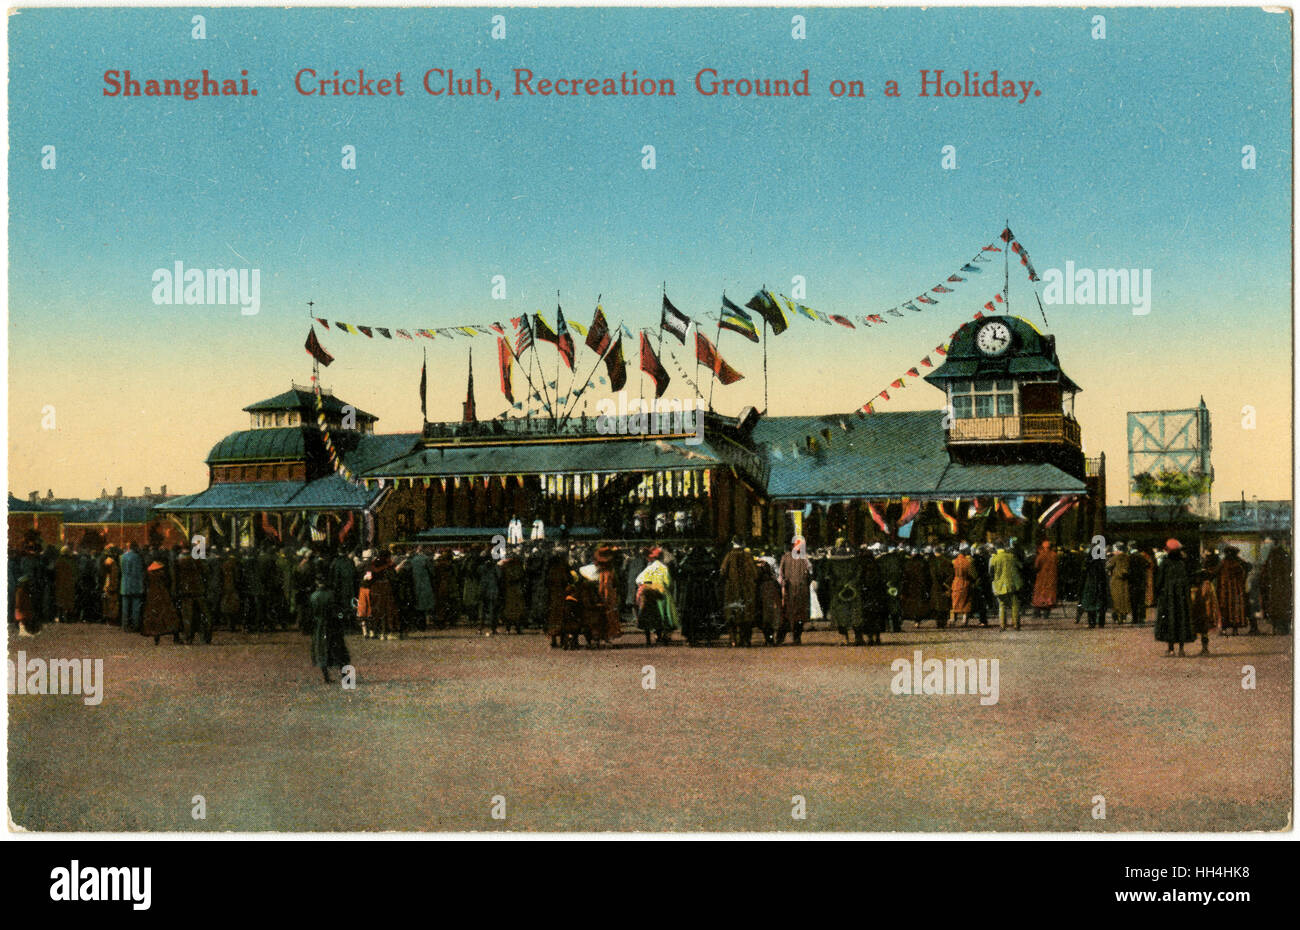 Shanghai Cricket Club and Recreation Ground, China. Stock Photo